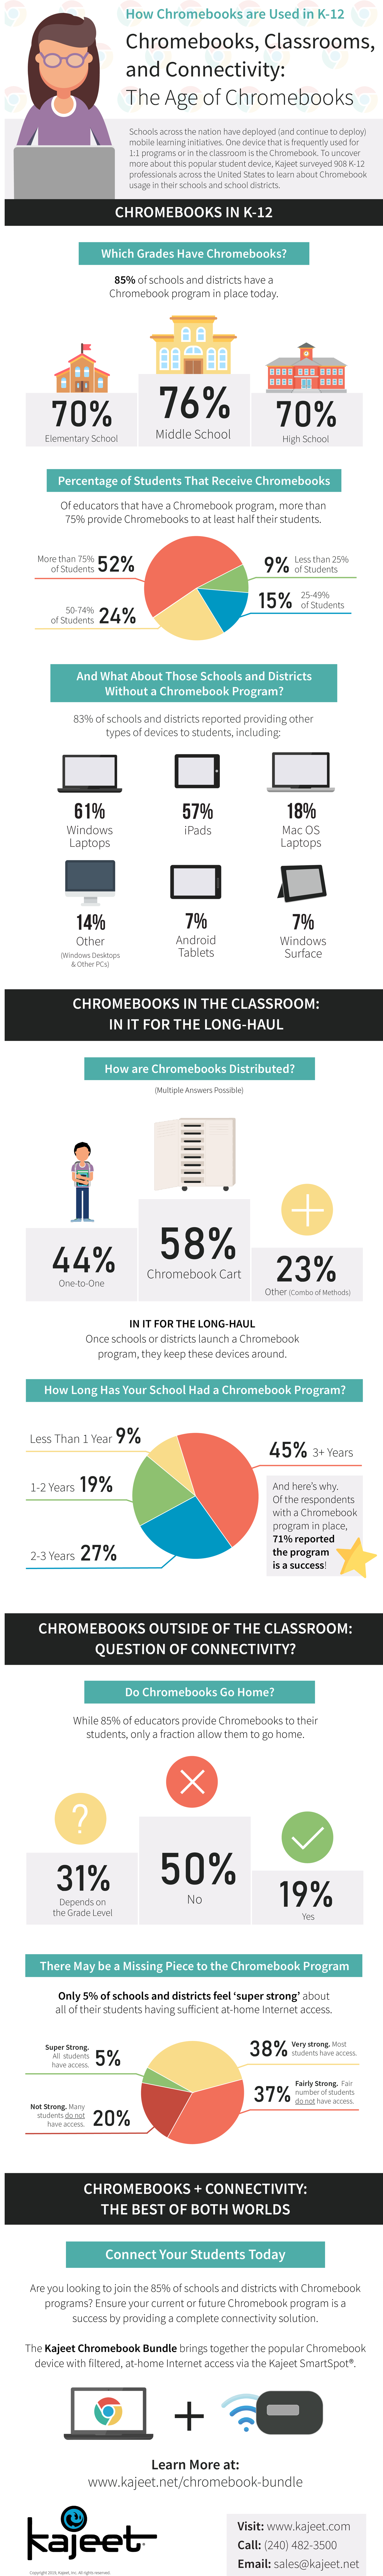 Kajeet Chromebook Survey Infographic 2019